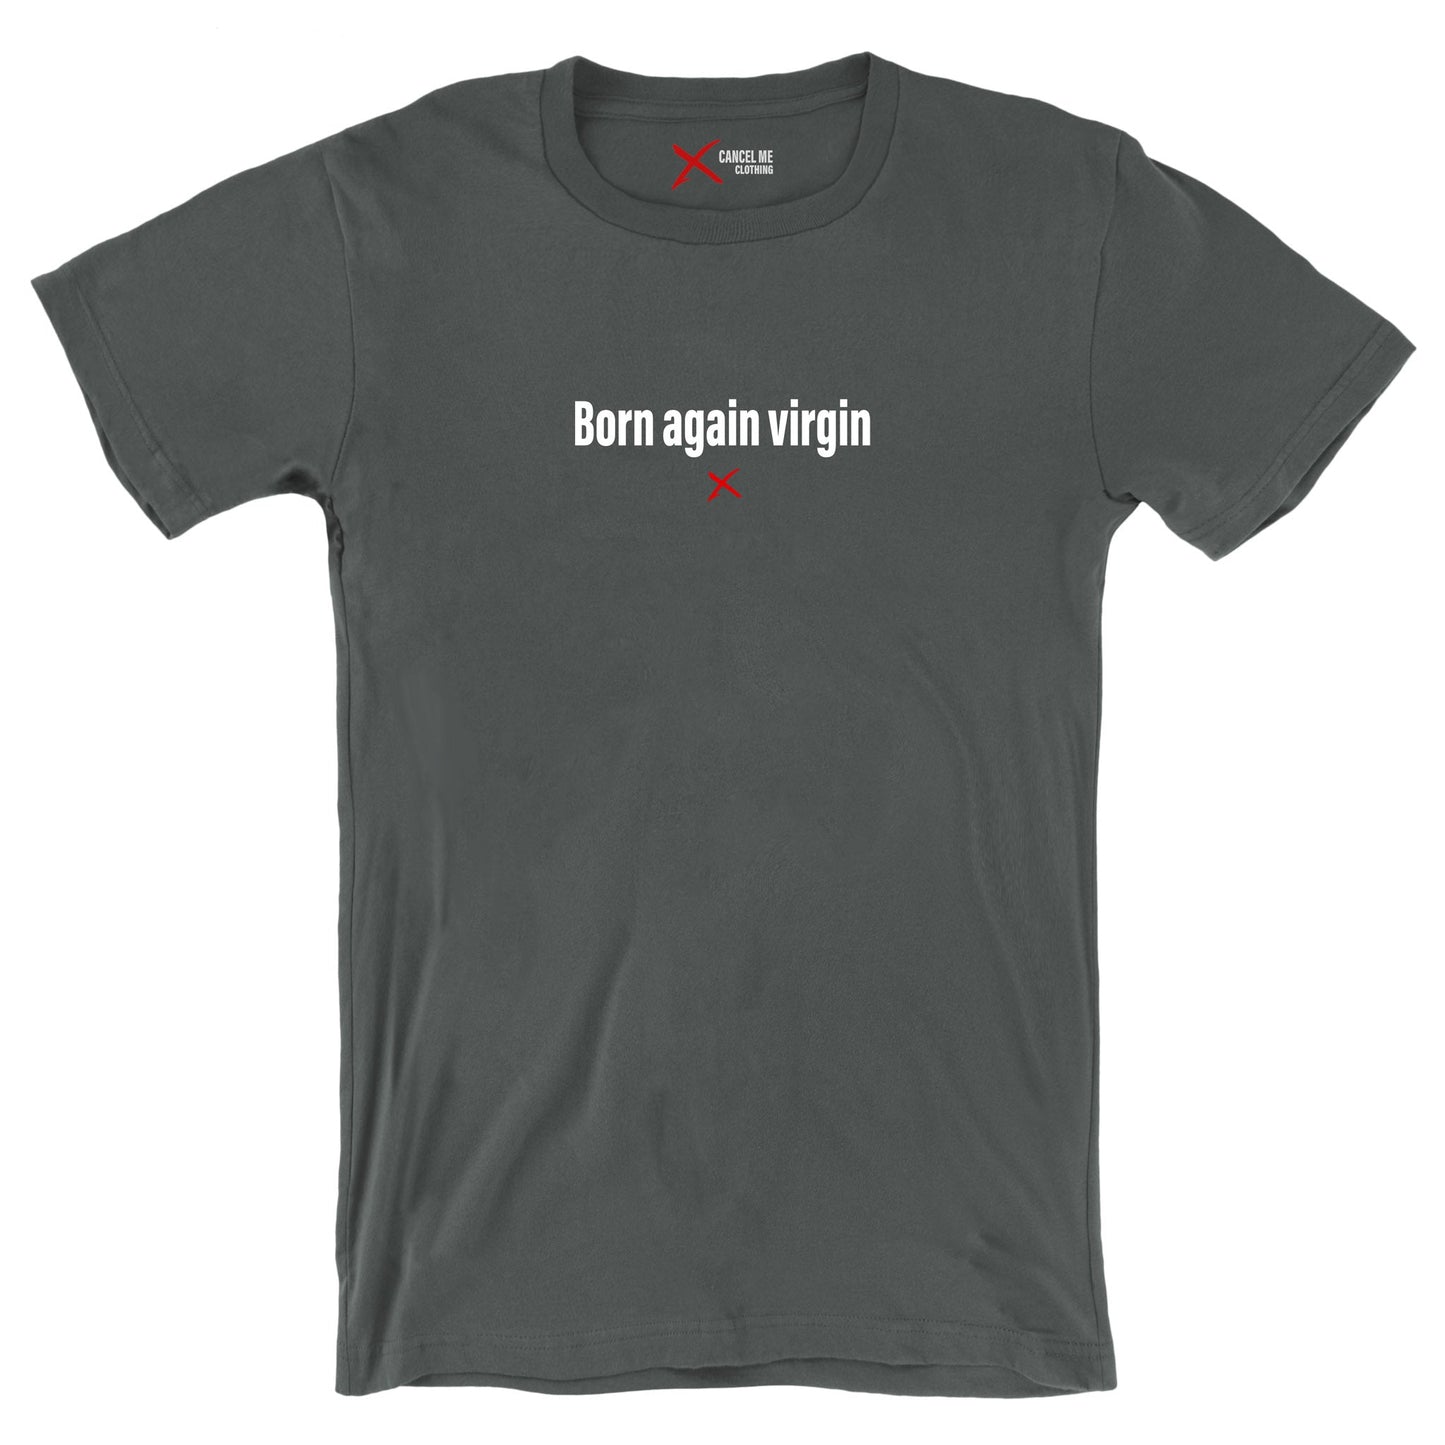 Born again virgin - Shirt